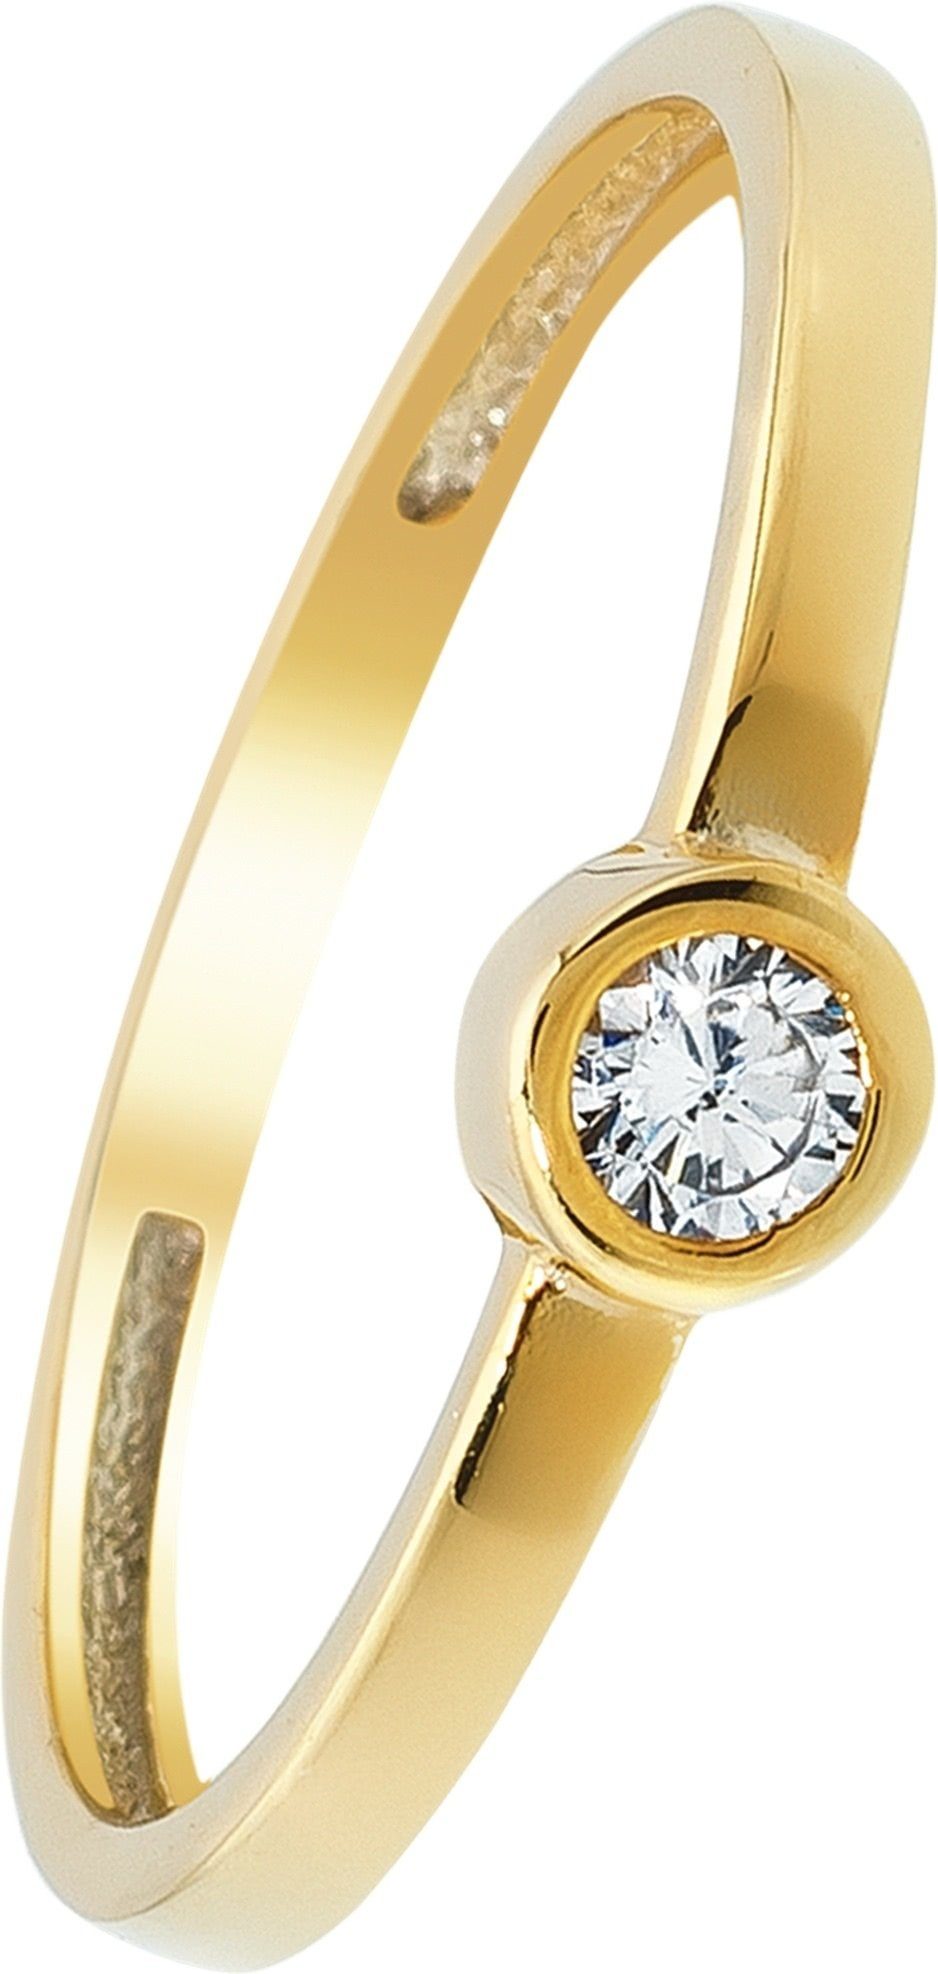 Balia Goldring Balia Damen Ring Gelbgold 8Karat Gr.60 (Fingerring), Damen Ring Kristall, 60 (19,1), aus Gold 333, Farbe: gold, weiß